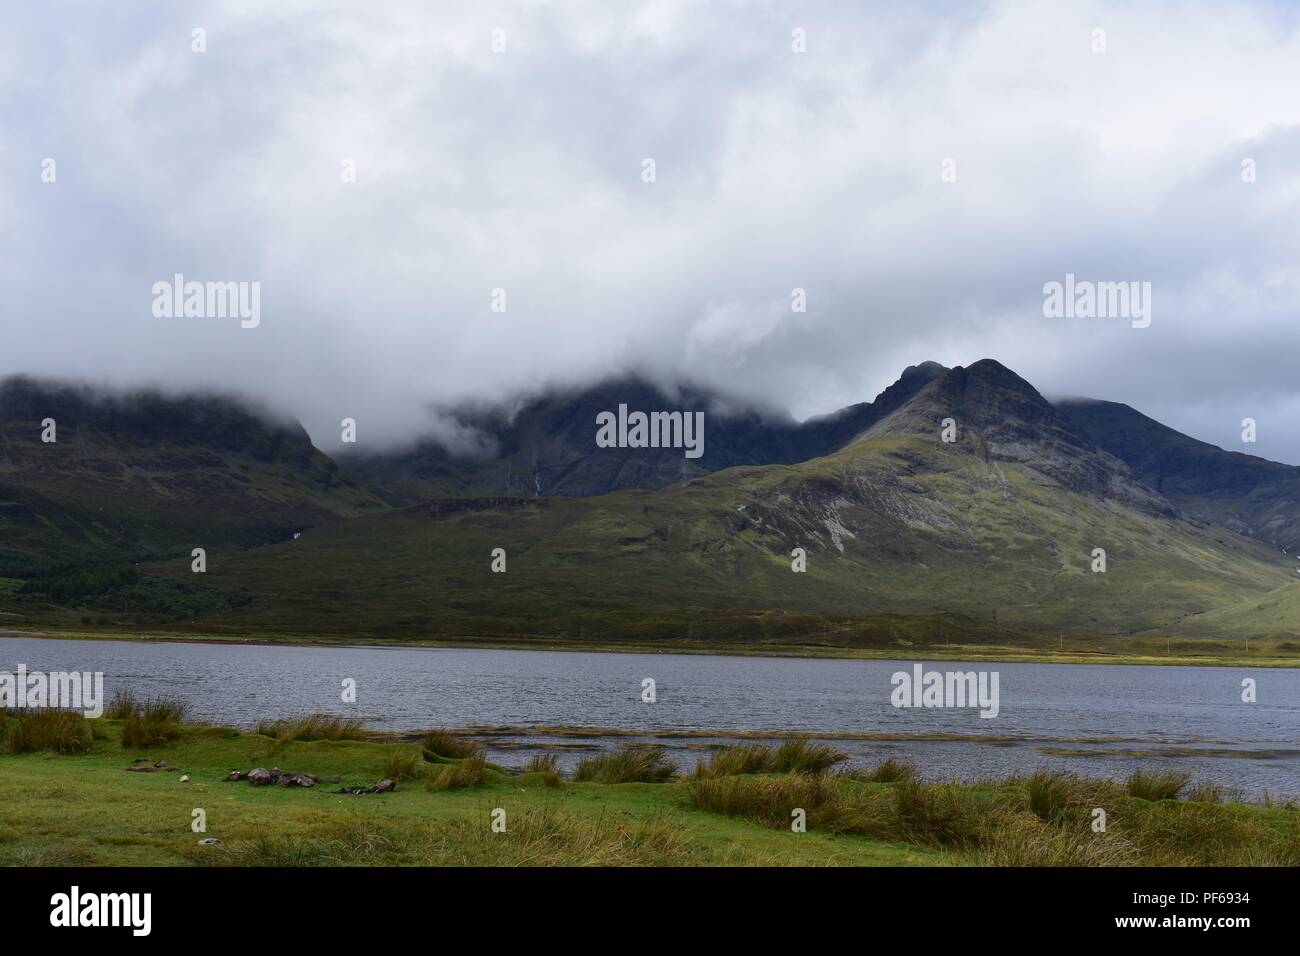 View at Loch Slapin, Isle of Skye, Scotland Stock Photo